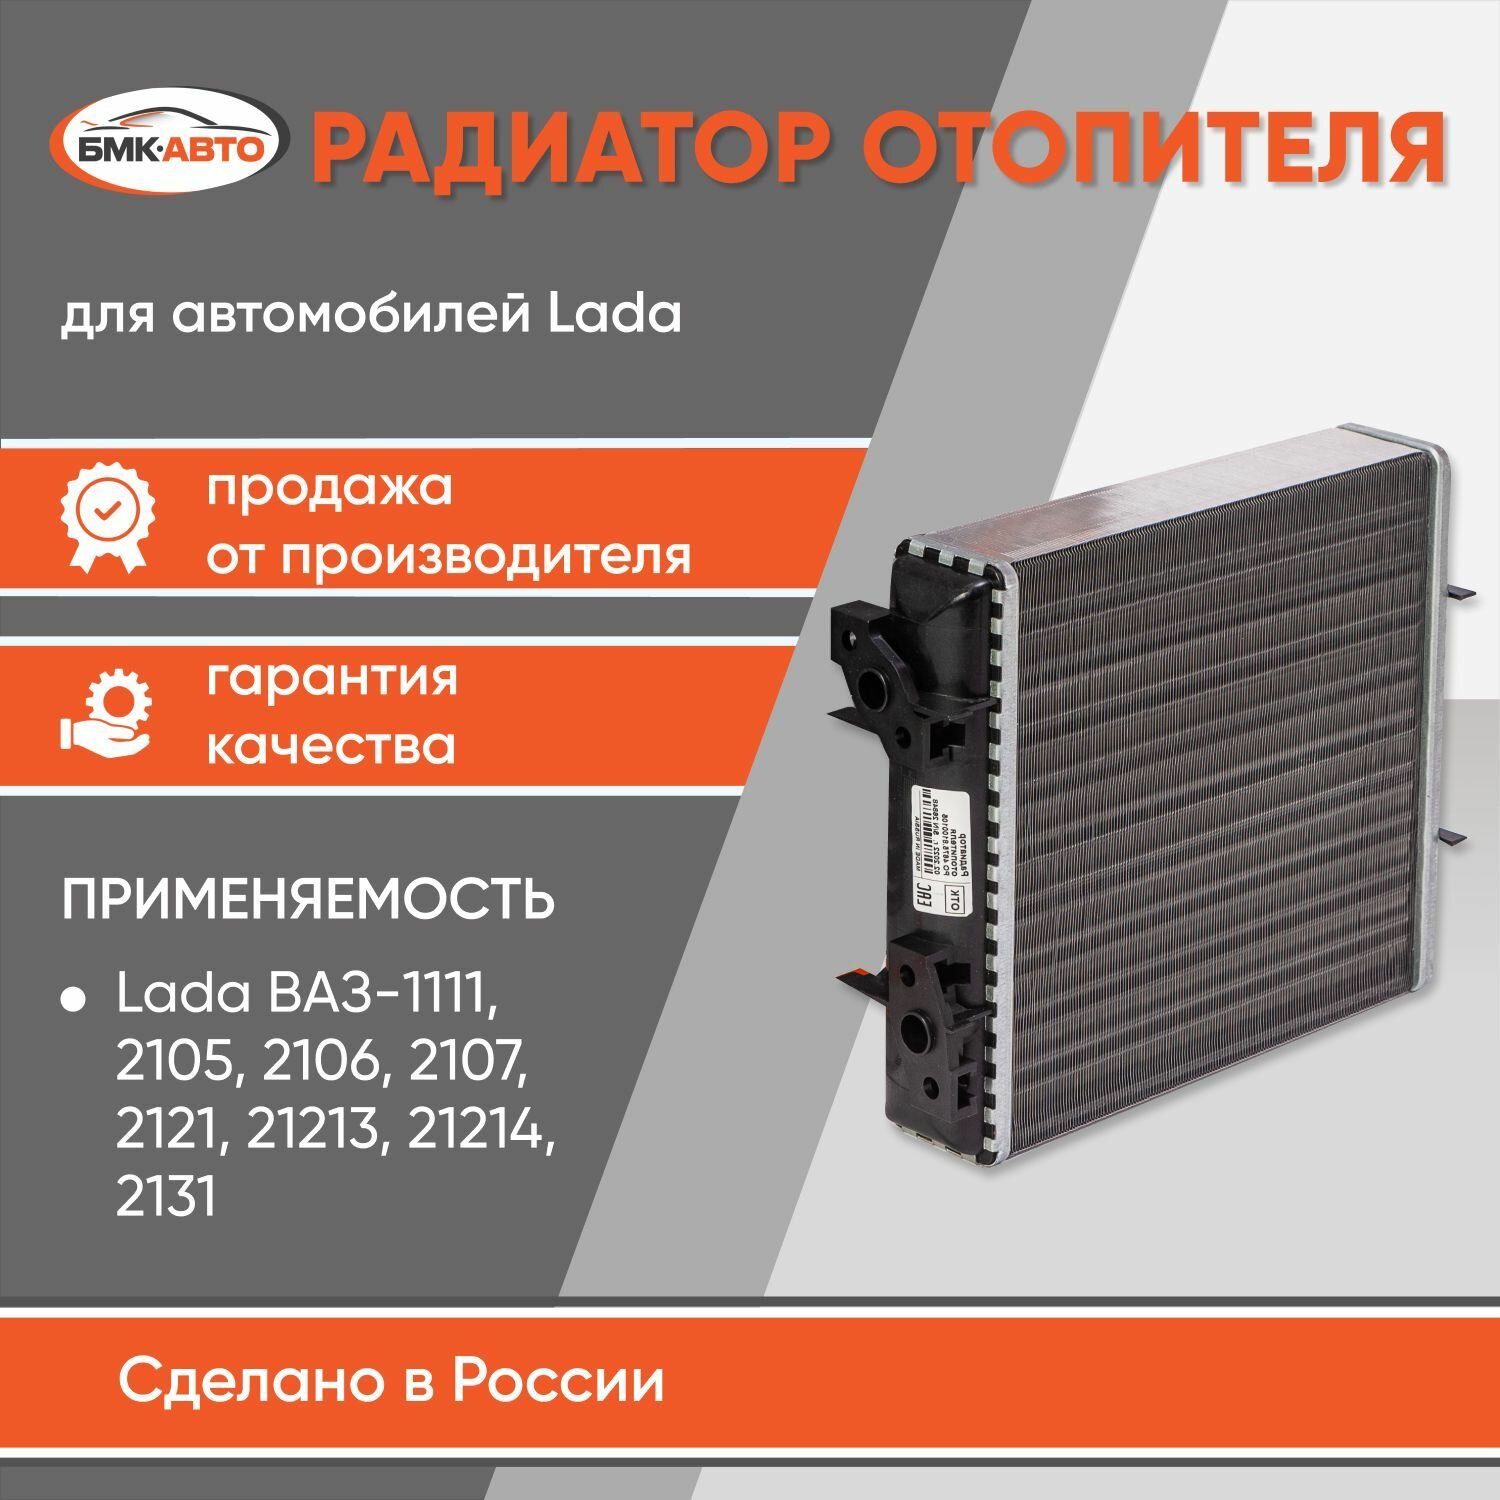 Радиатор отопителя (печки) ВАЗ 2101-07 2121 н/о (широкий) бмк-авто